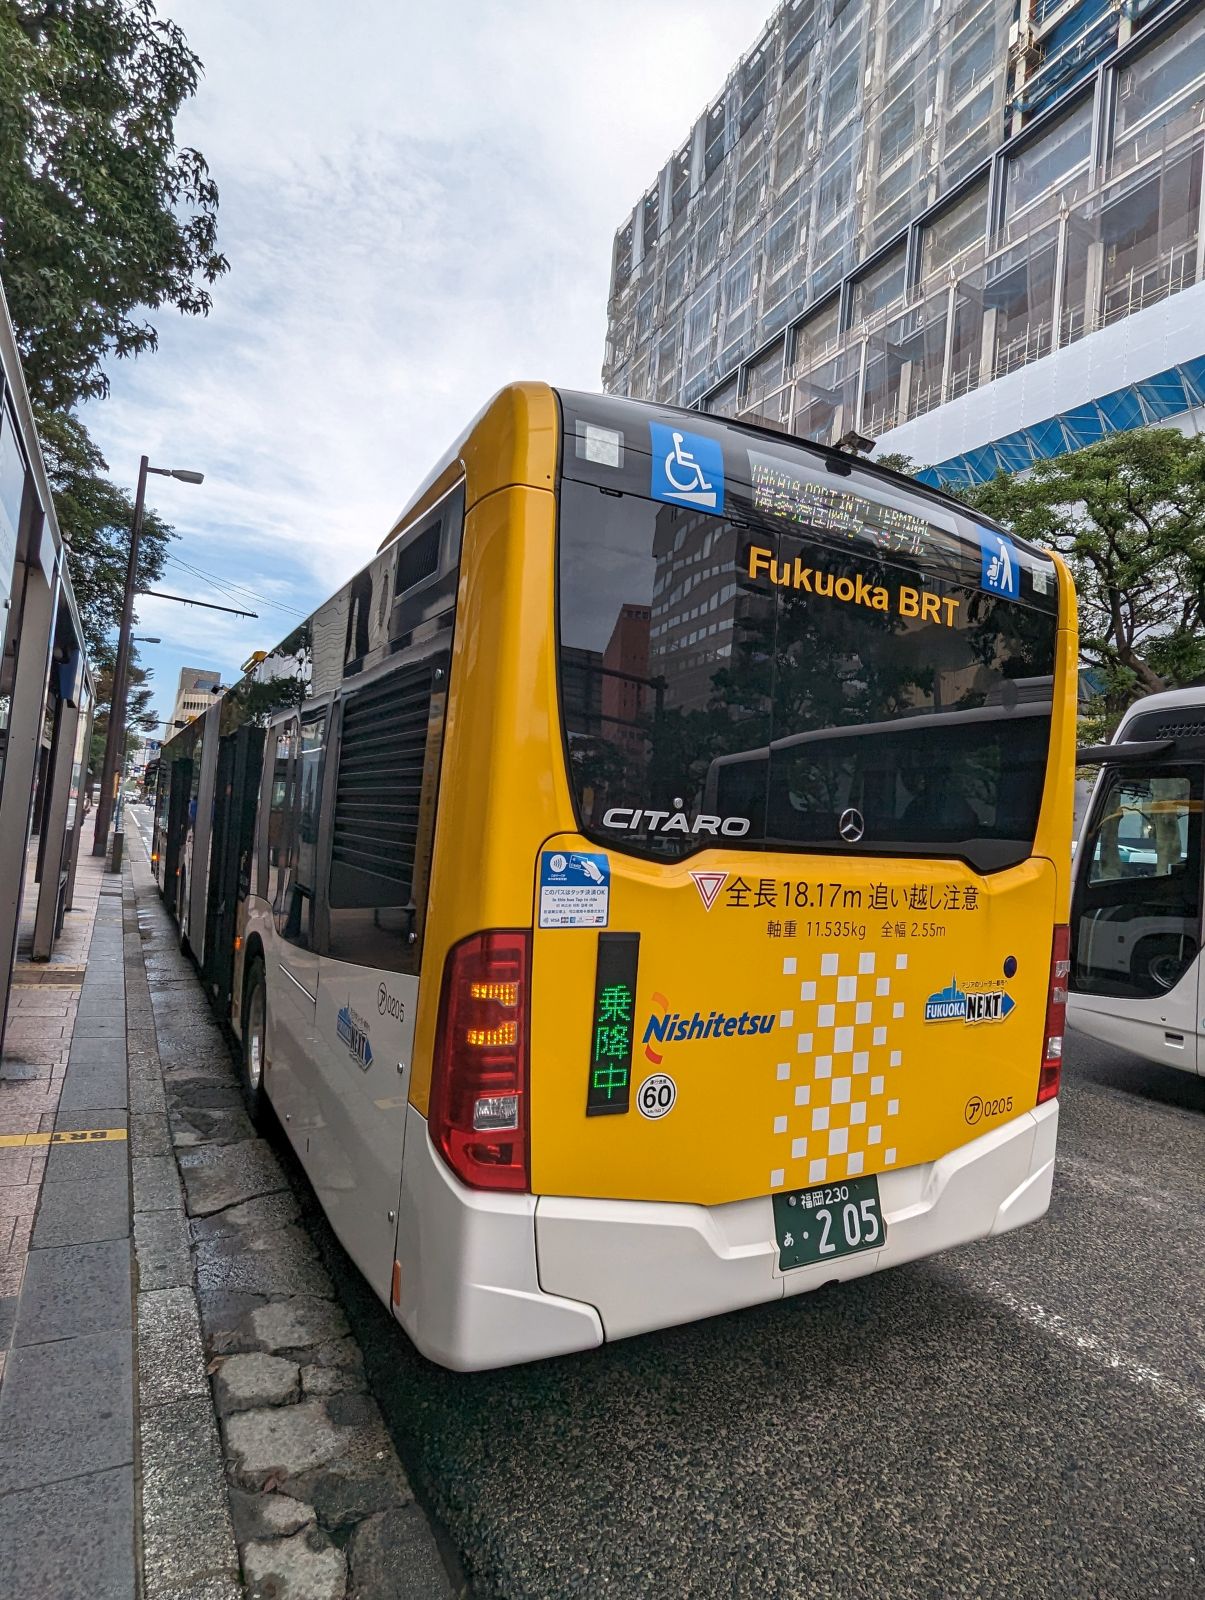 Fukuoka BRT